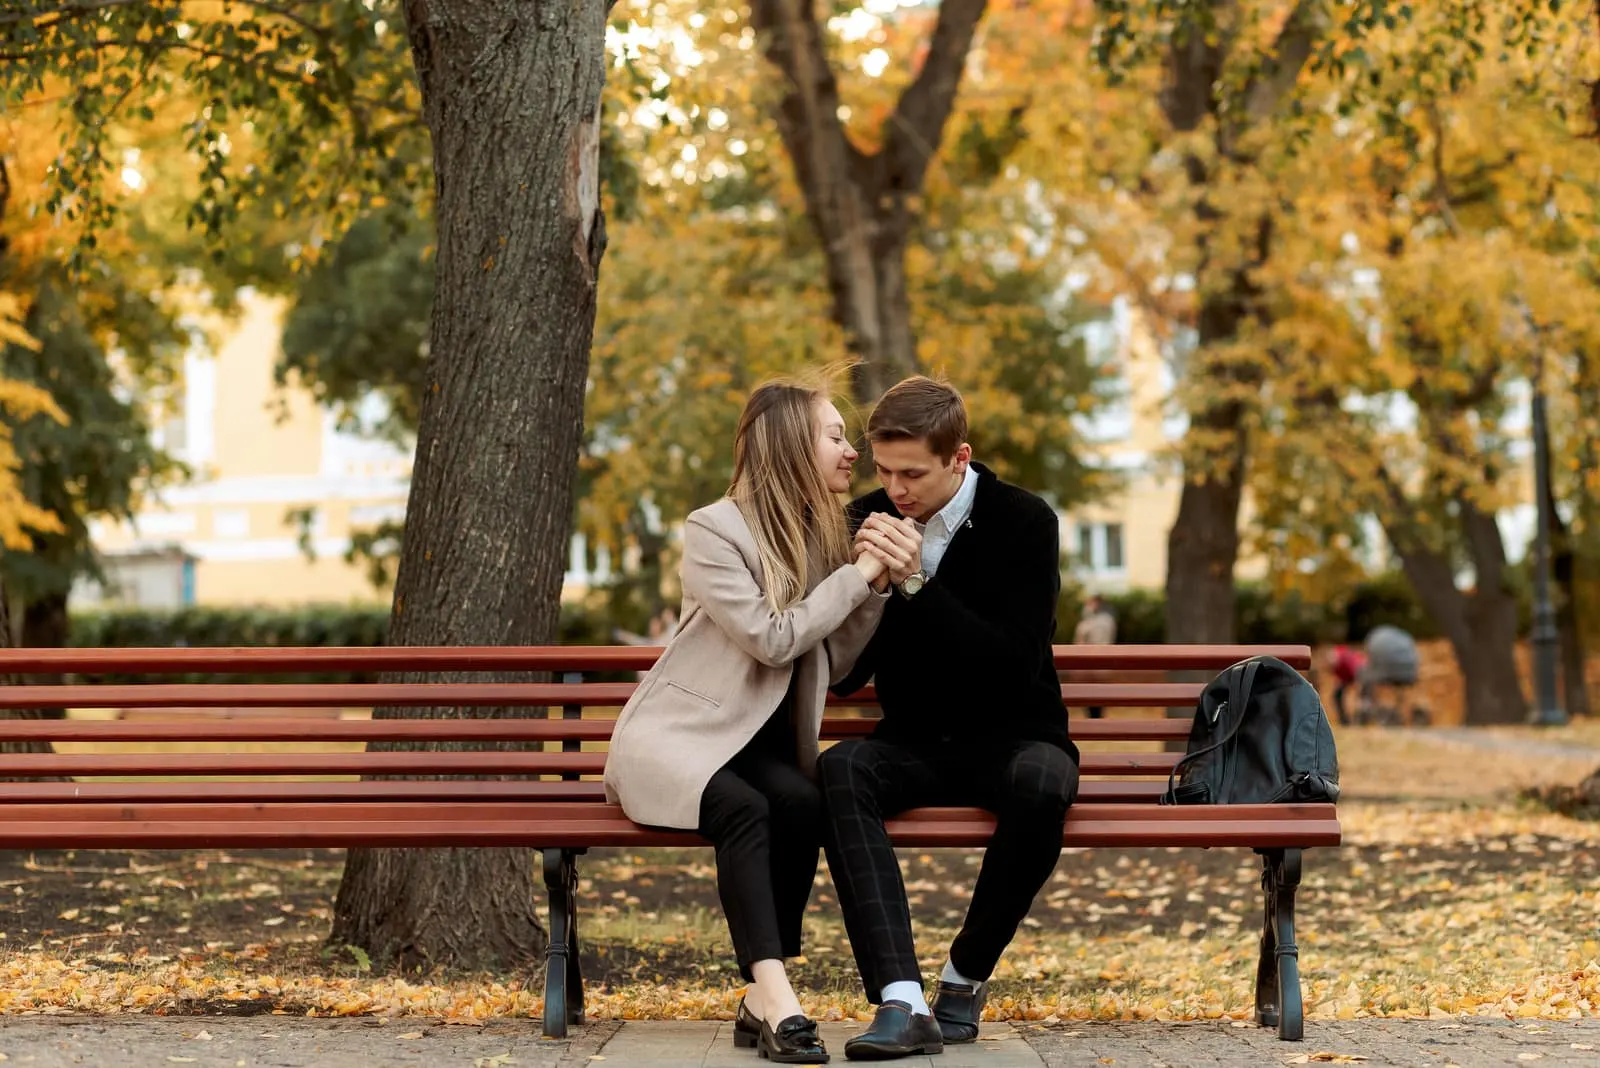 on a park bench a man kisses a woman's hands